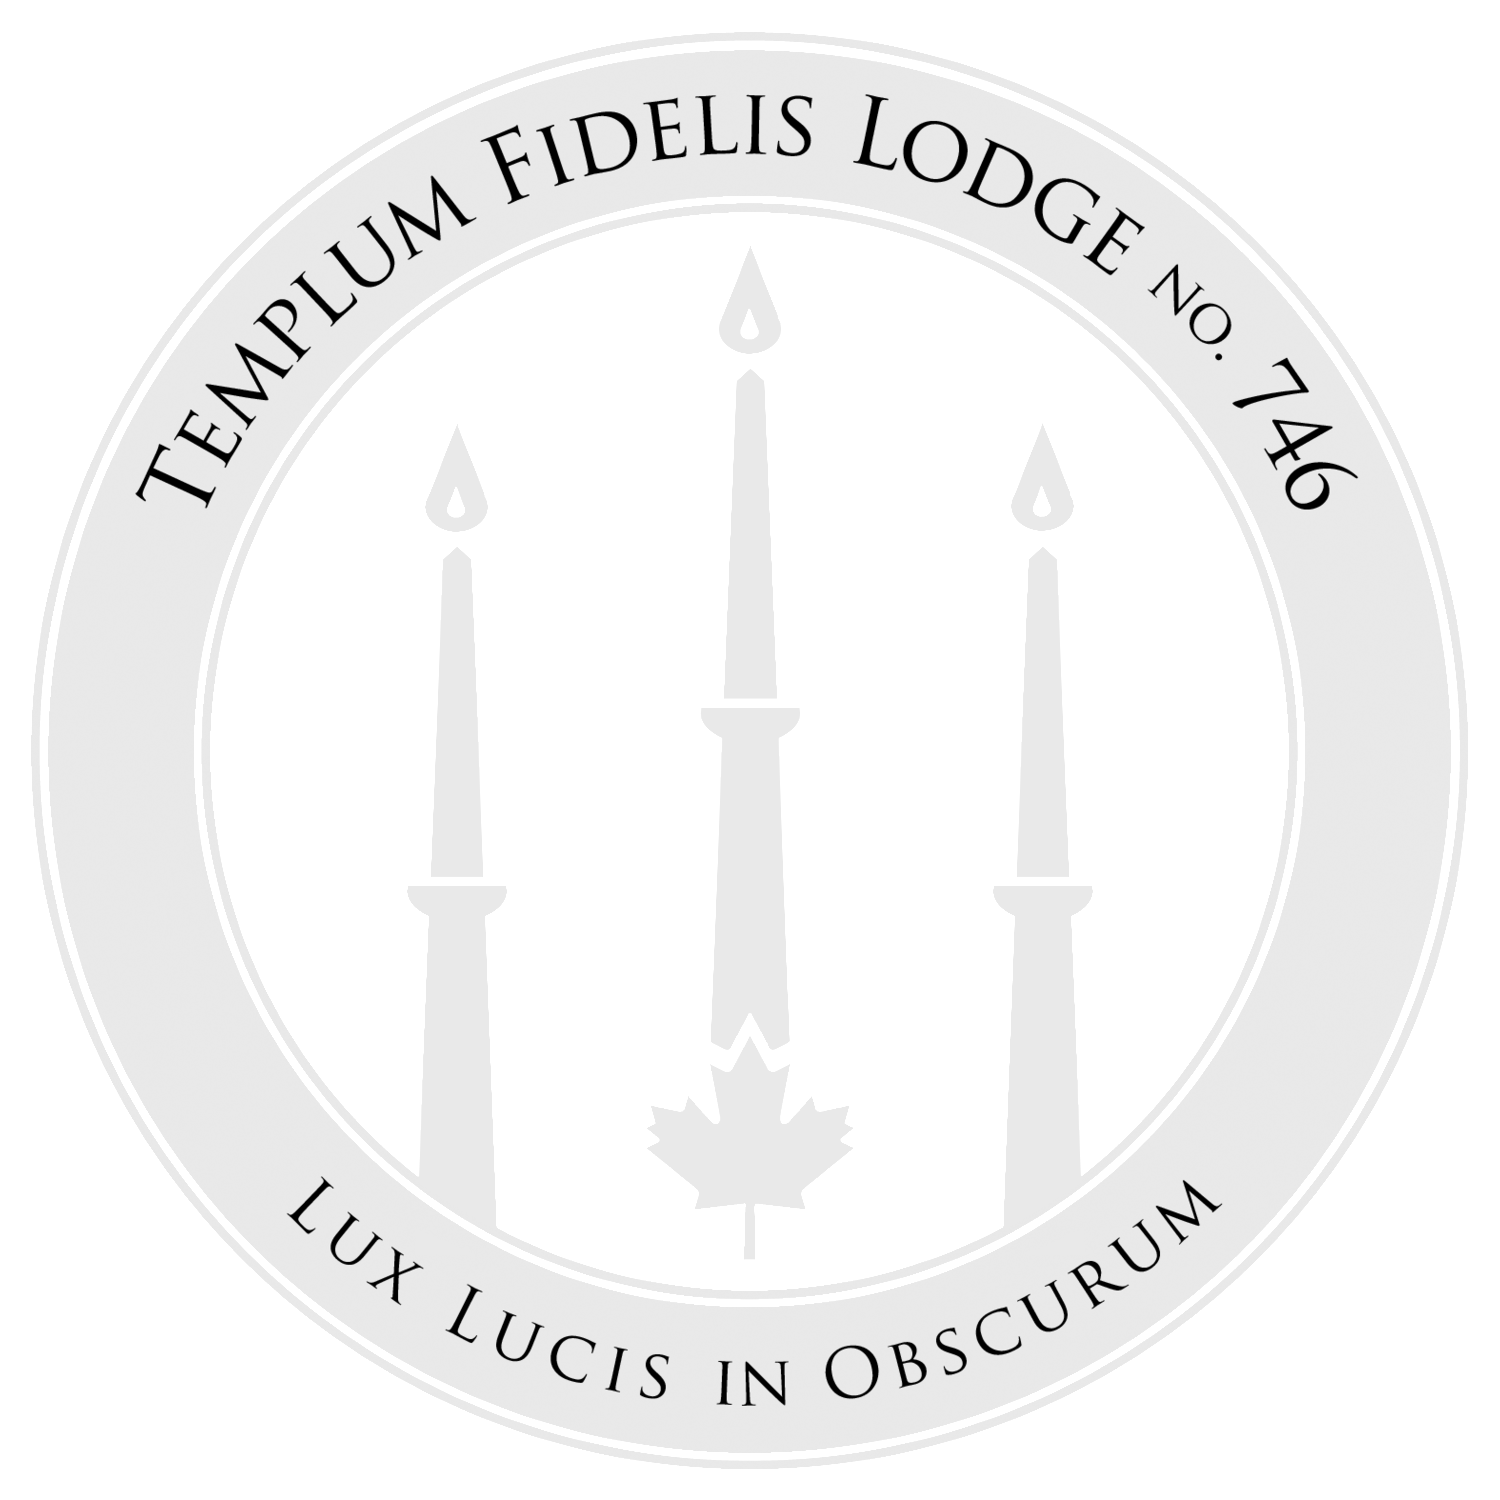 Templum Fidelis Lodge No. 746